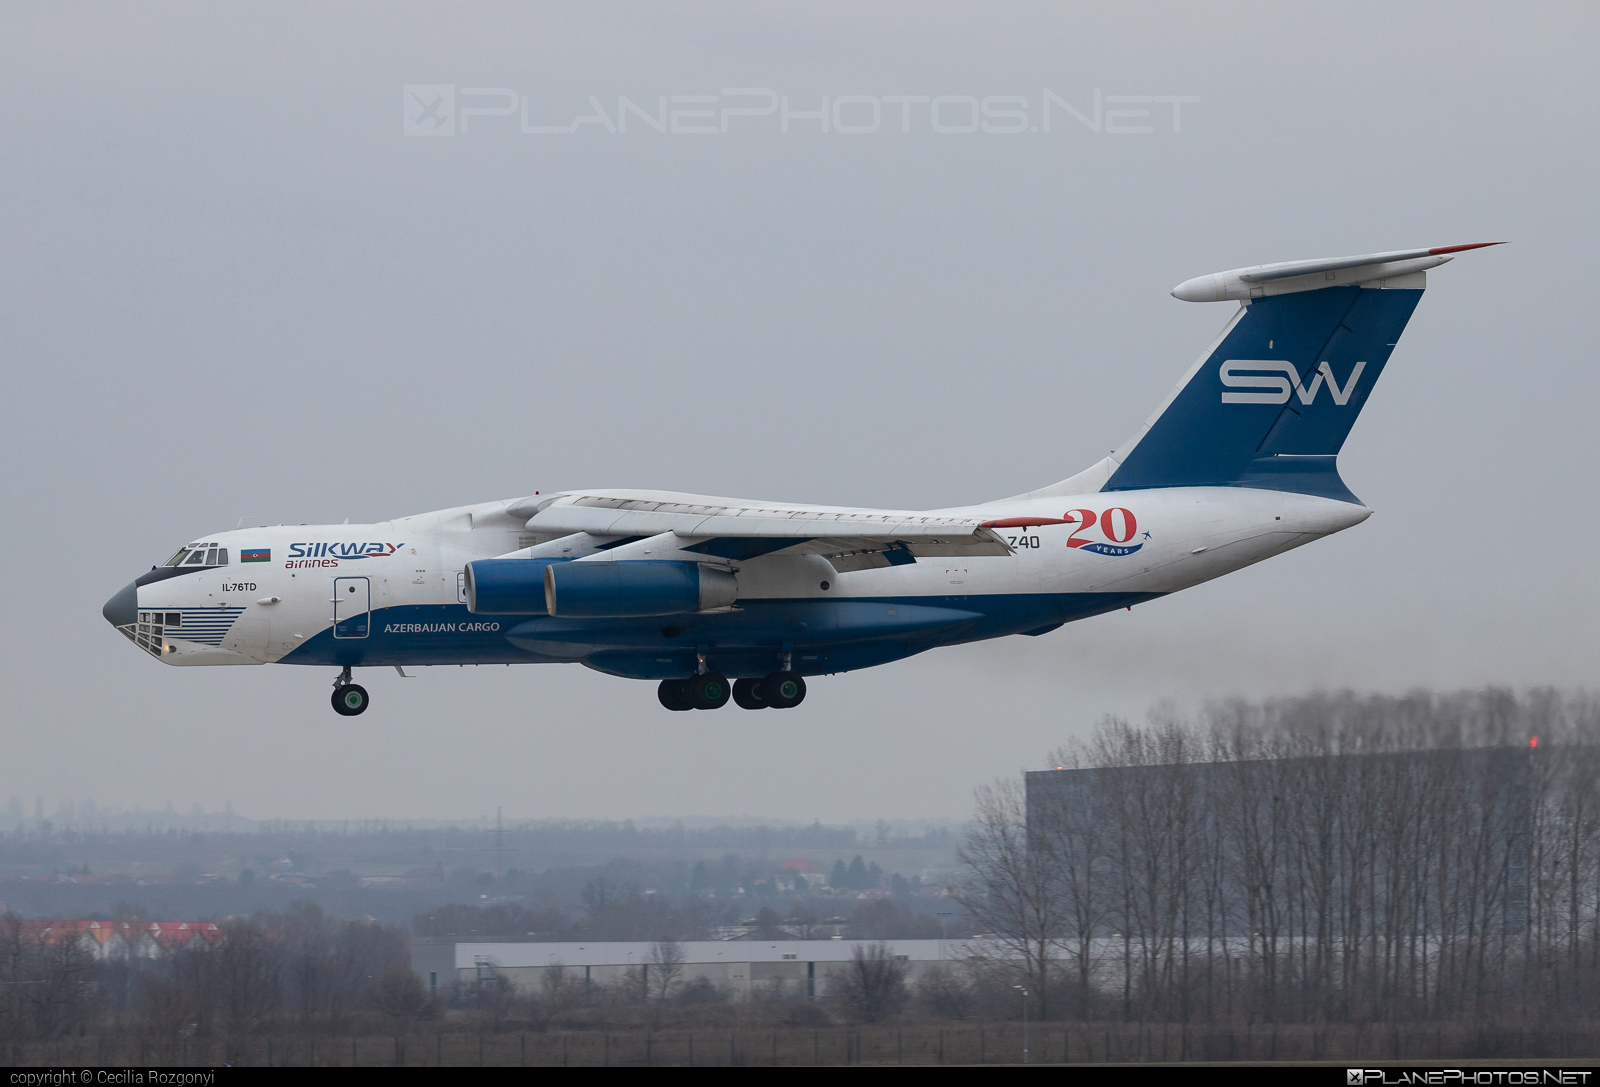 Ilyushin Il-76TD - 4K-AZ40 operated by Silk Way Airlines #il76 #il76td #ilyushin #silkwayairlines